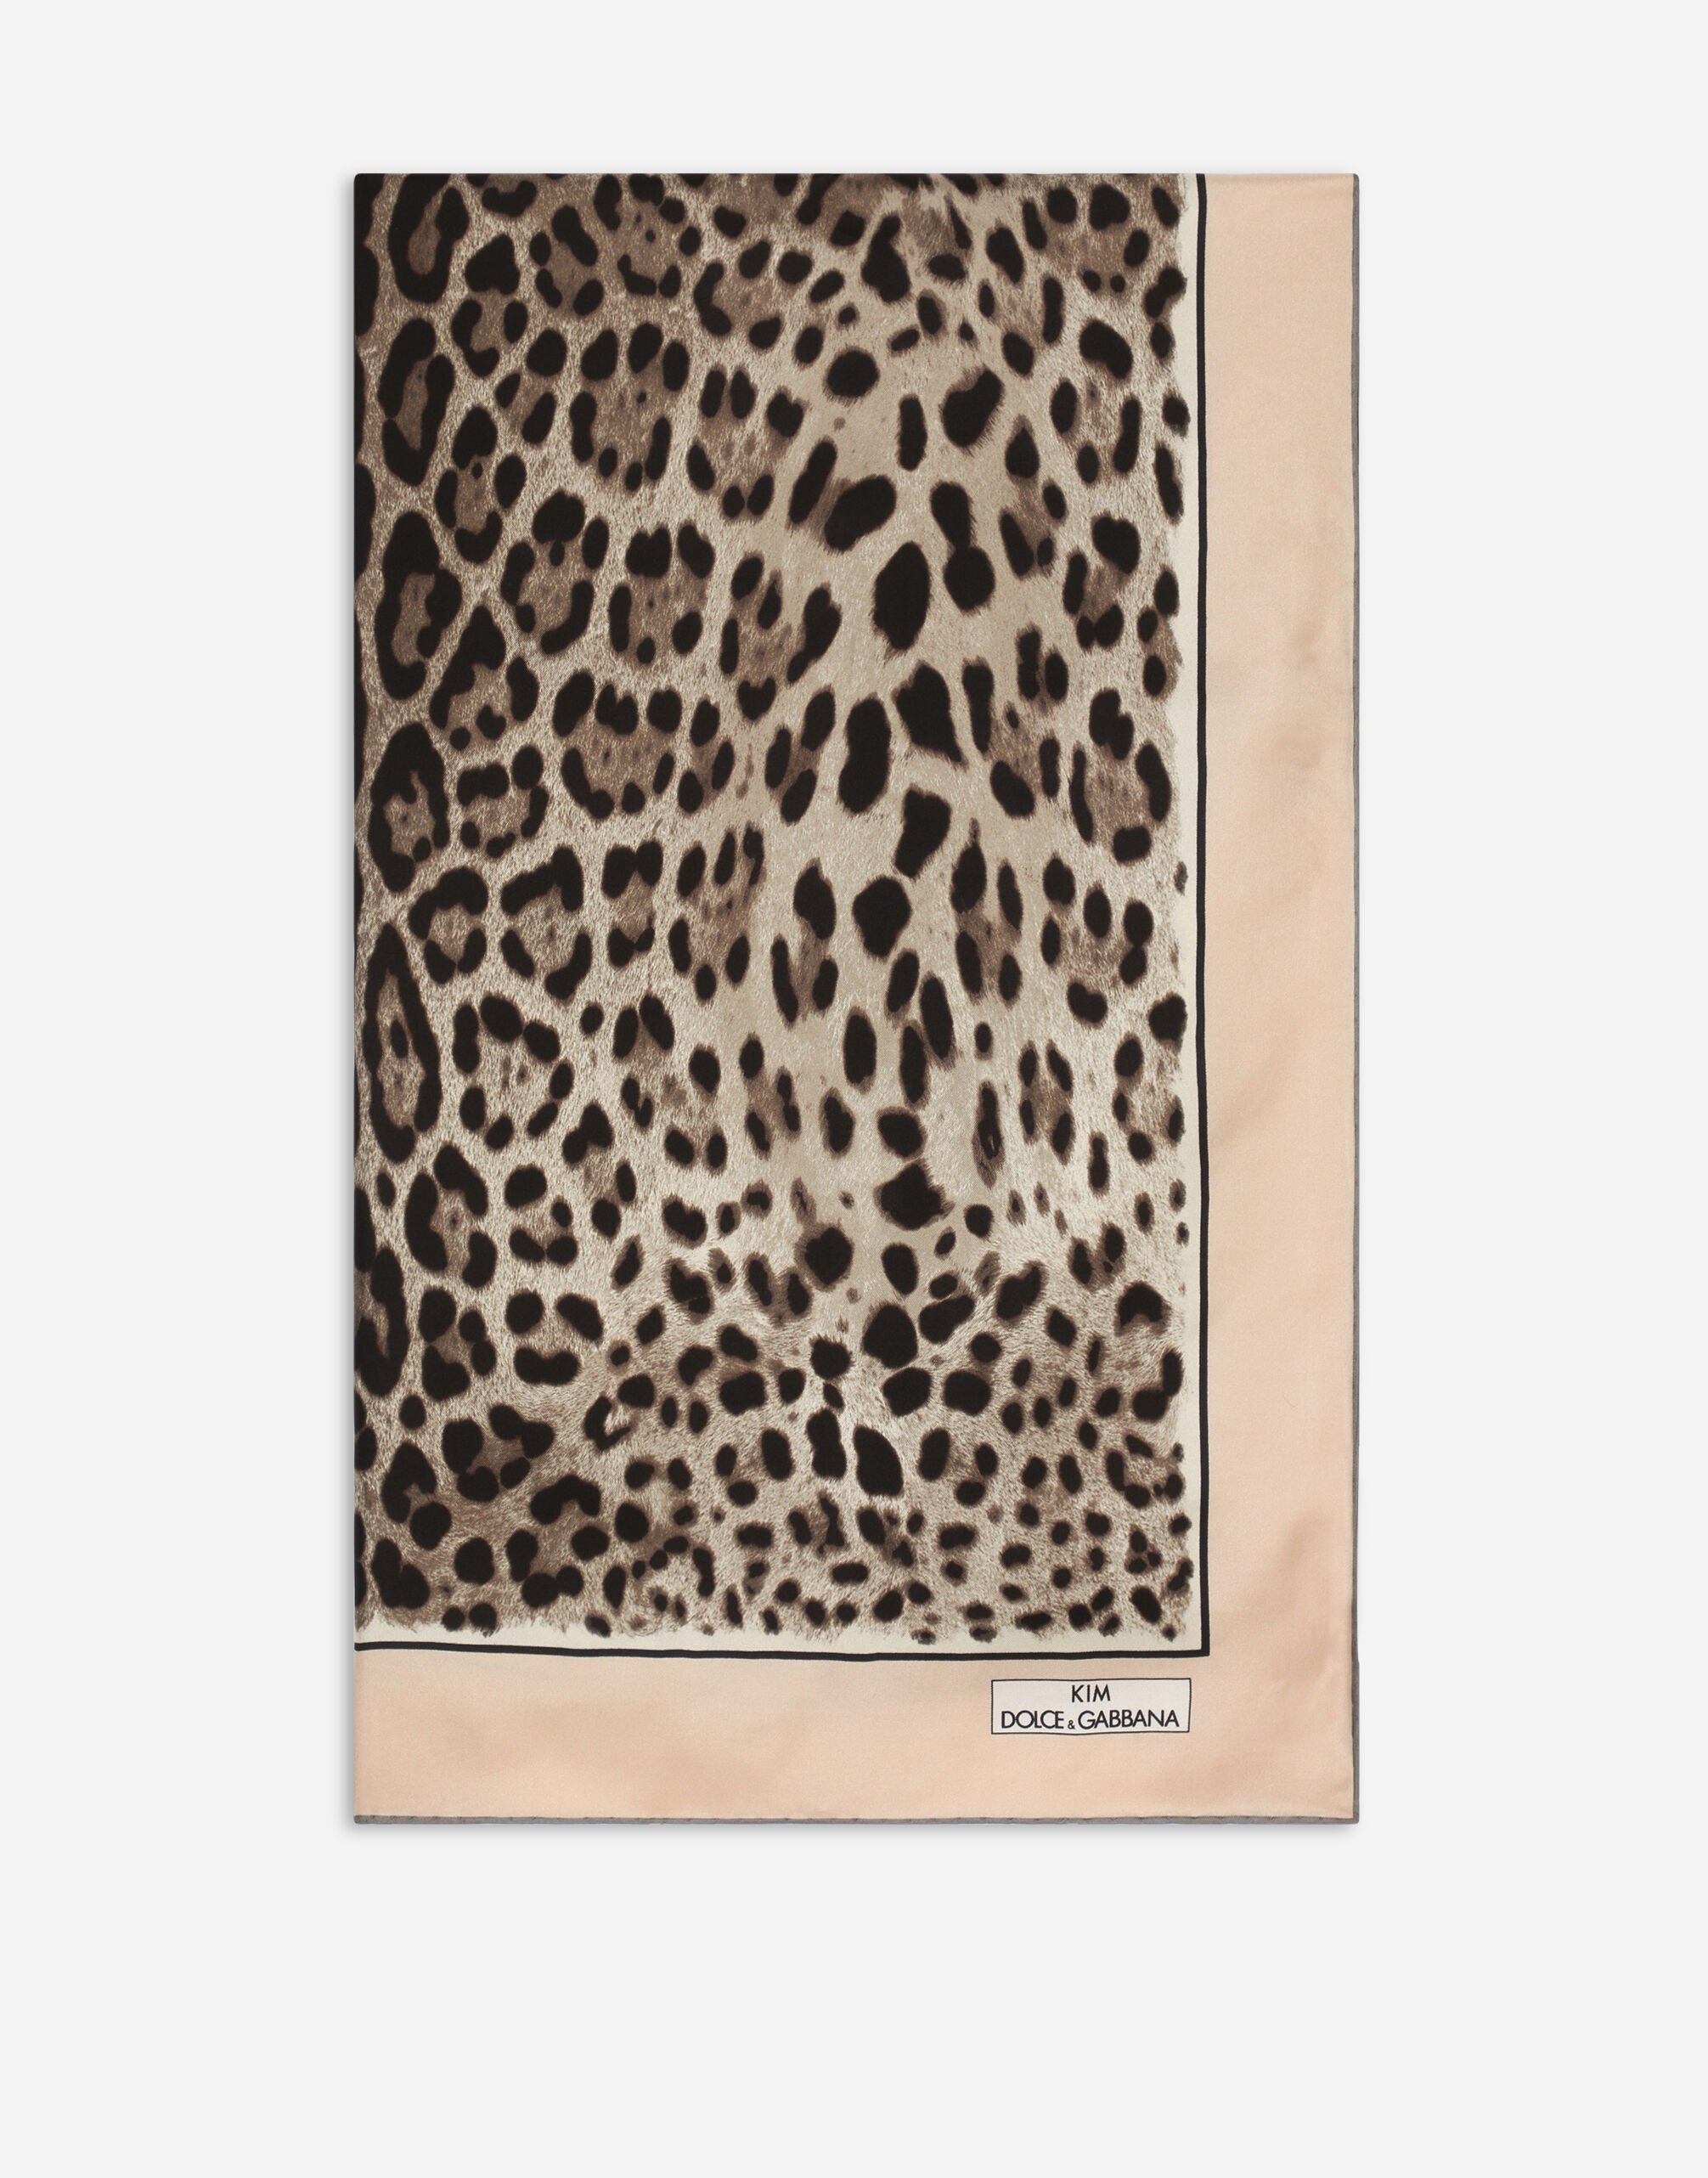 Dolce&Gabbana KIM DOLCE&GABBANA Leopard-print twill scarf (90 x 90) Multicolor FS182AGDBI4